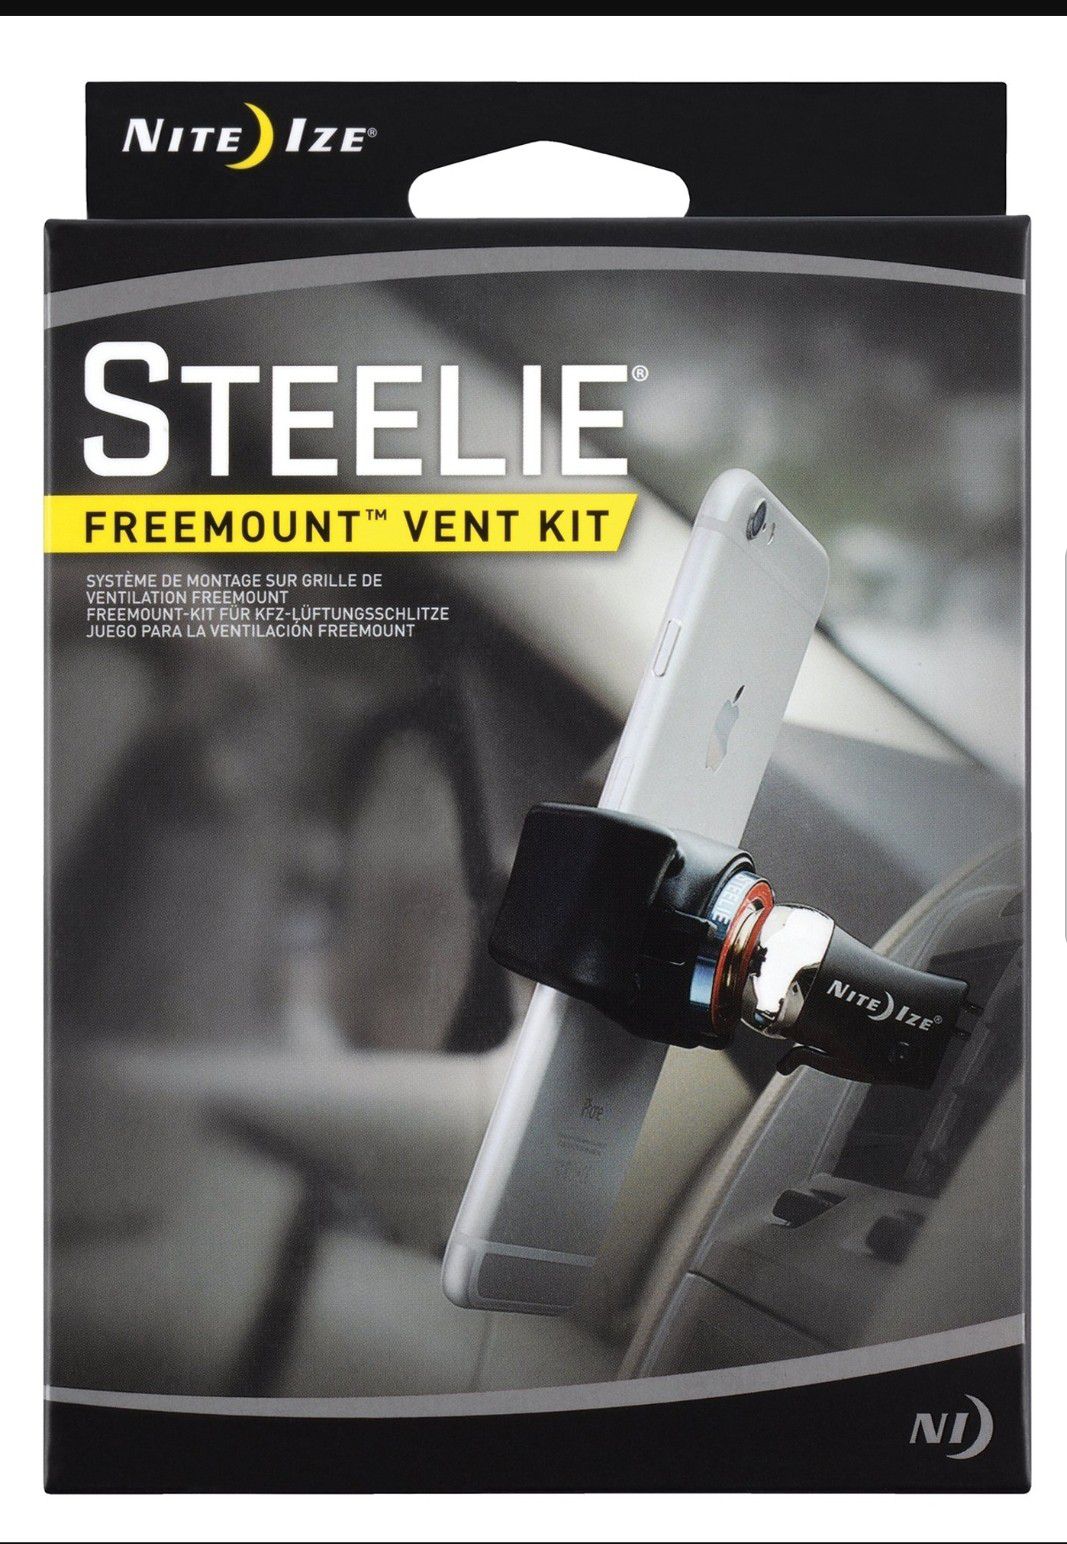 Cell phone vent kit - Steelie Freemount